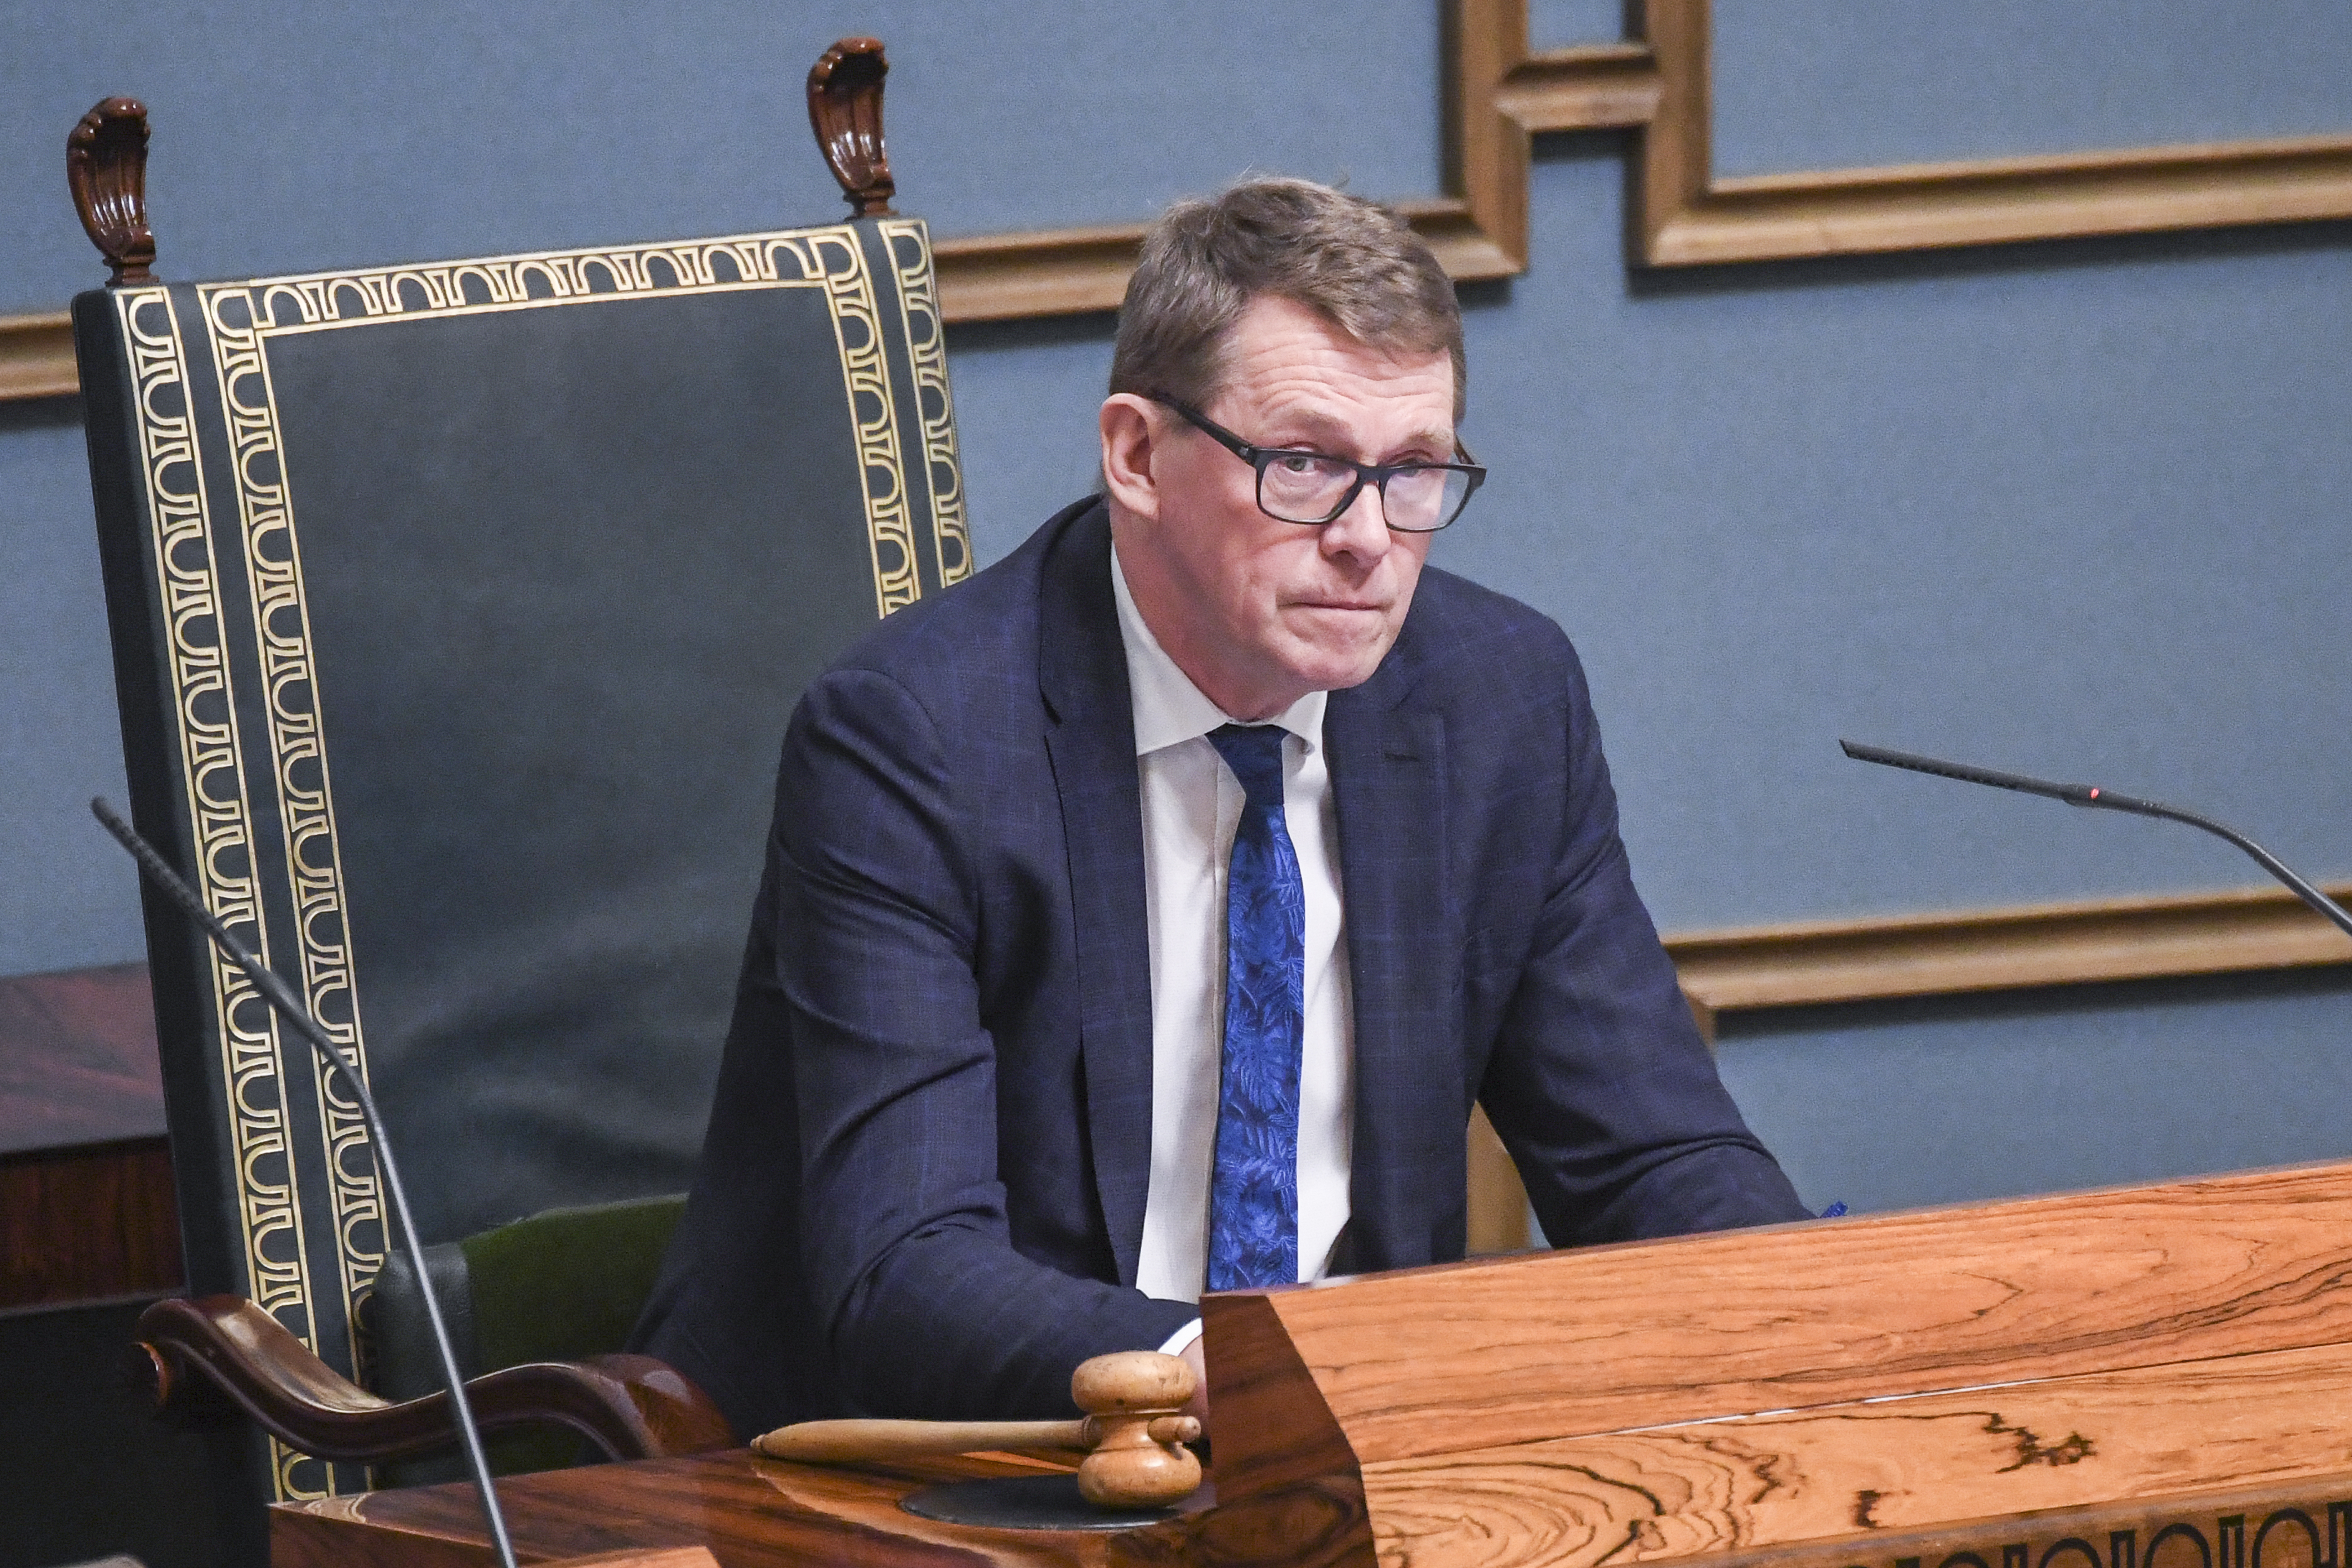 Former Prime Minister Vanhanen was elected Speaker of Parliament